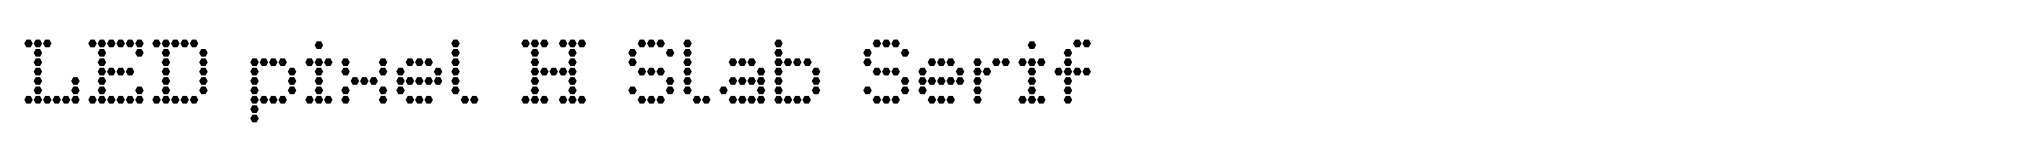 LED pixel H Slab Serif image